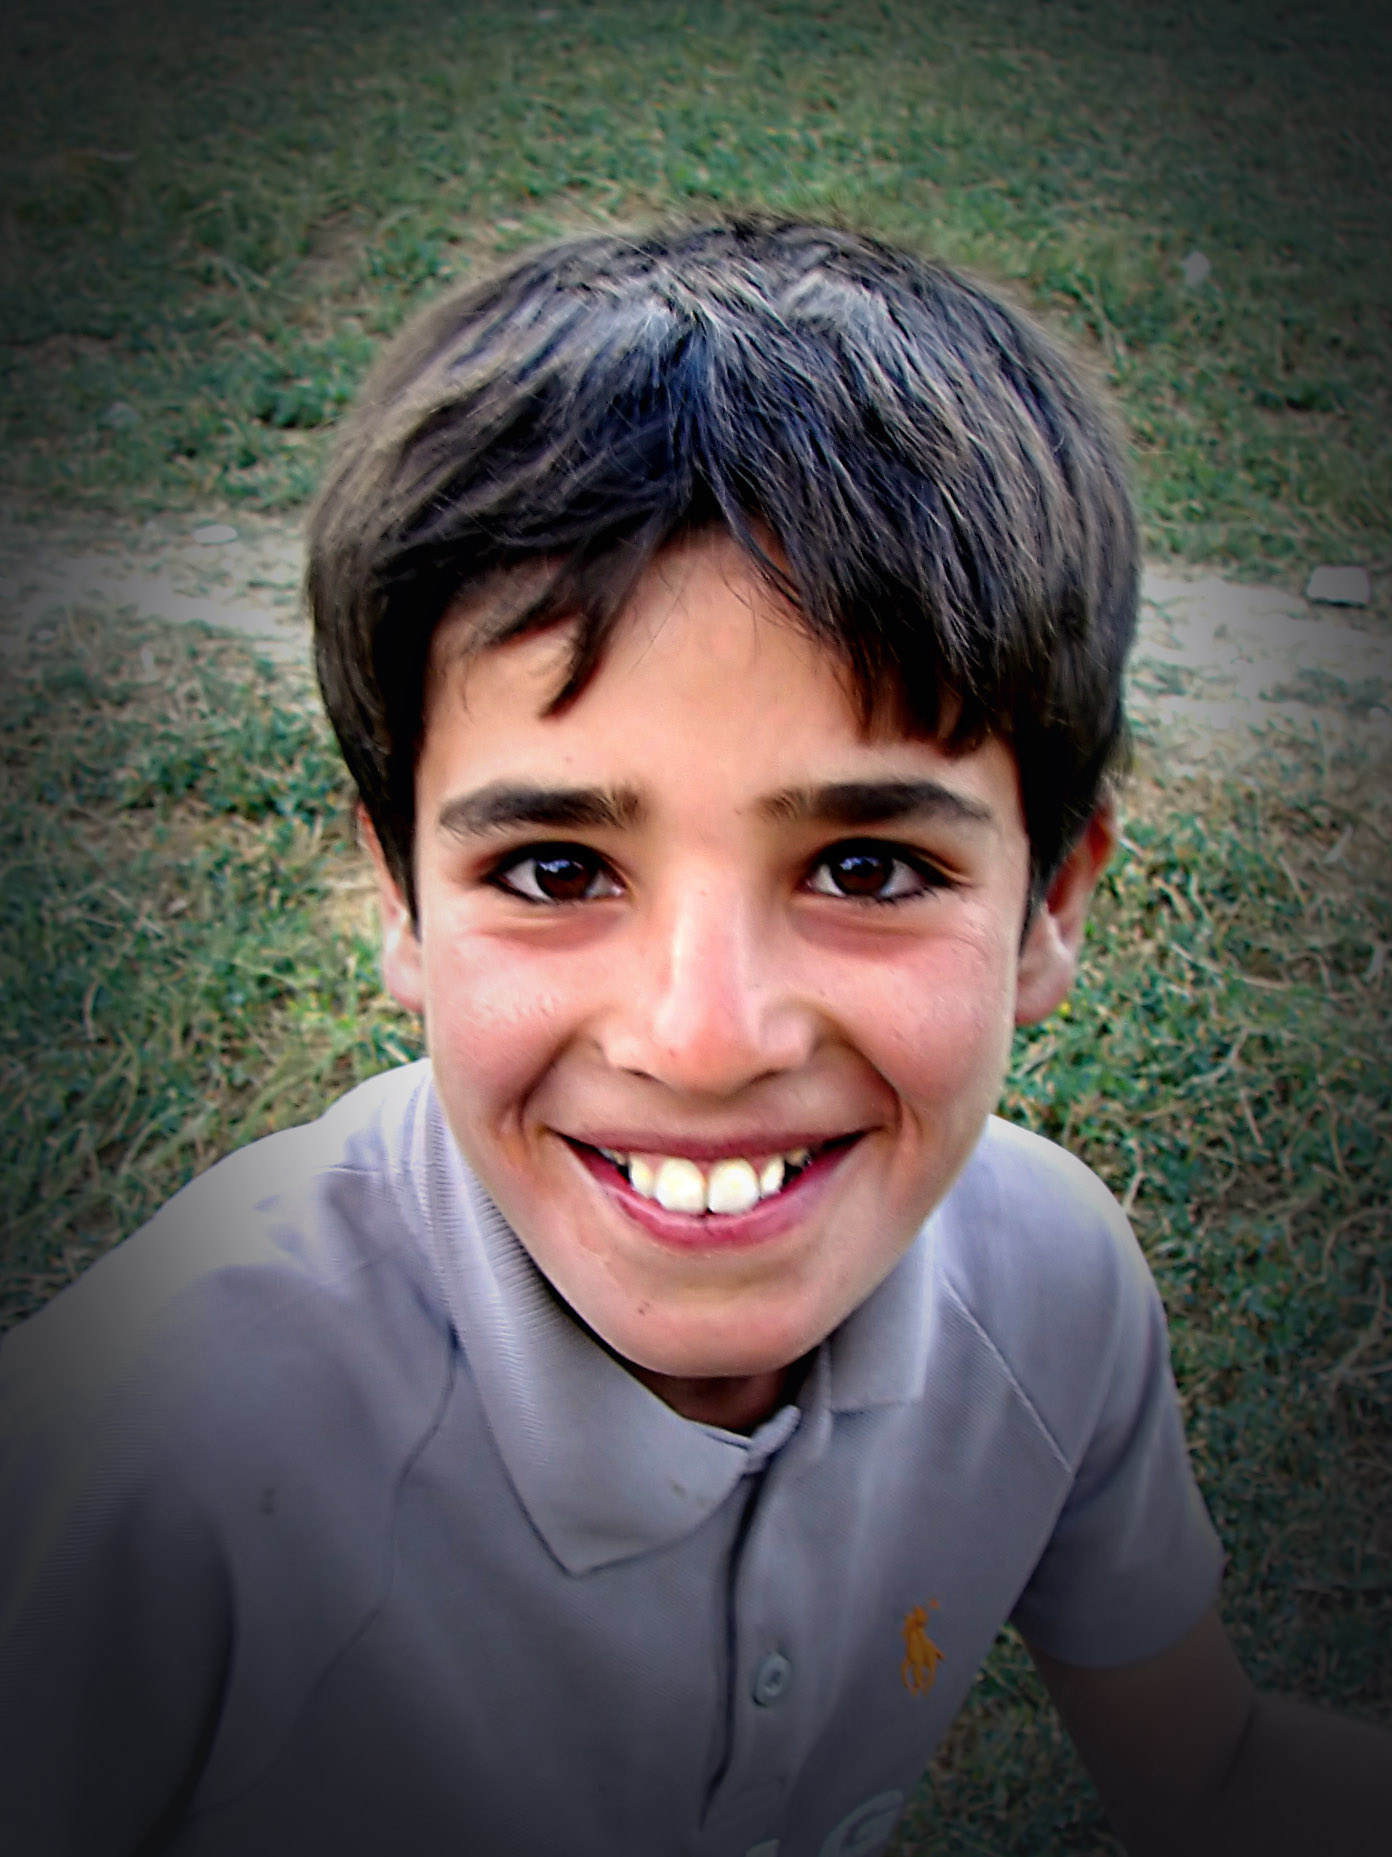 File:Smiling Iranian boy, Chaharmahal and Bakhtiari Province, Iran, 09